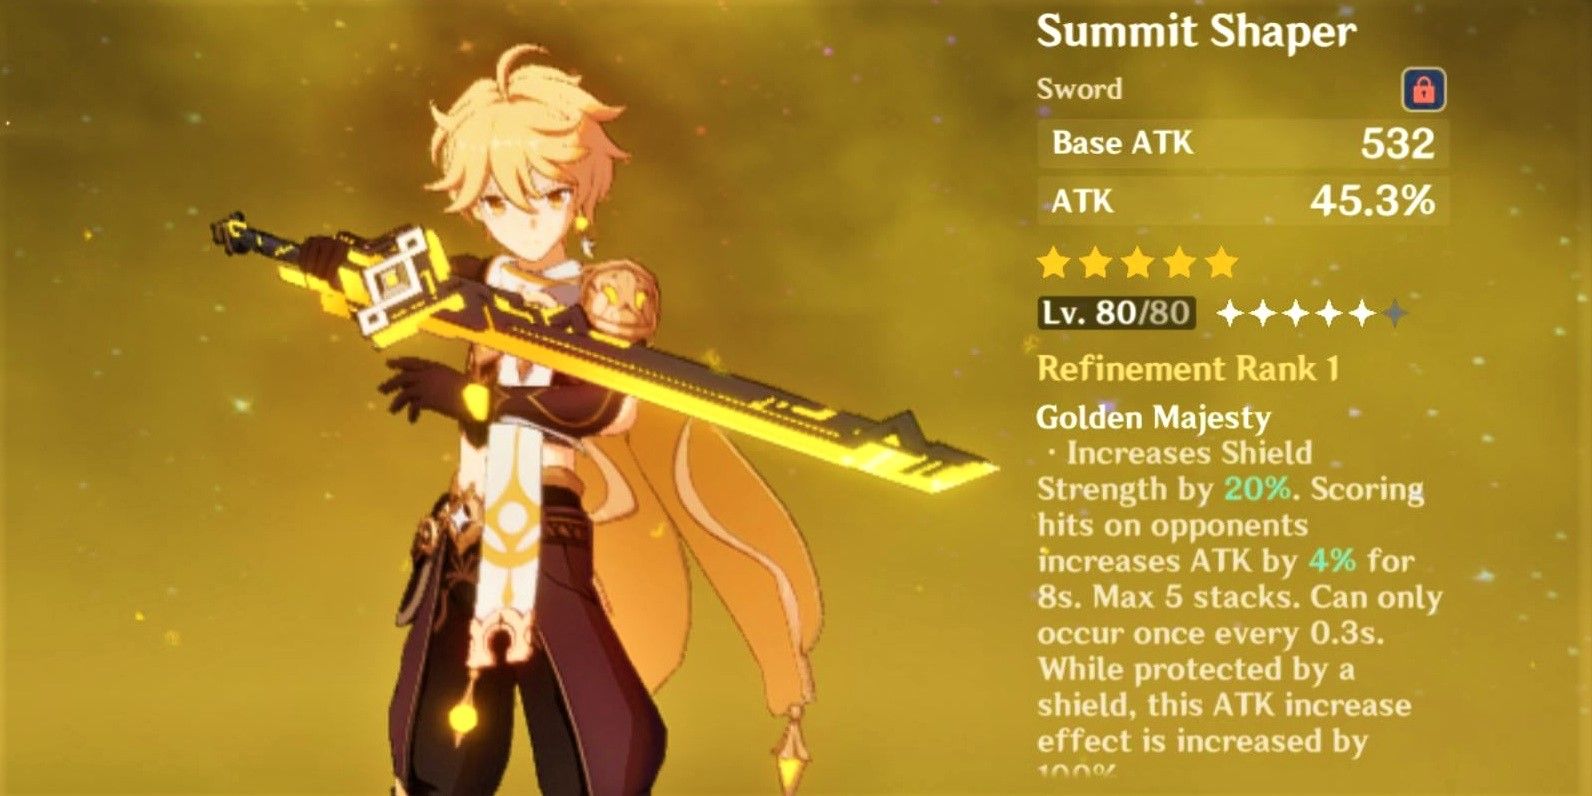 Genshin Impact Summit Shaper Sword Yellow Male Traveler Description